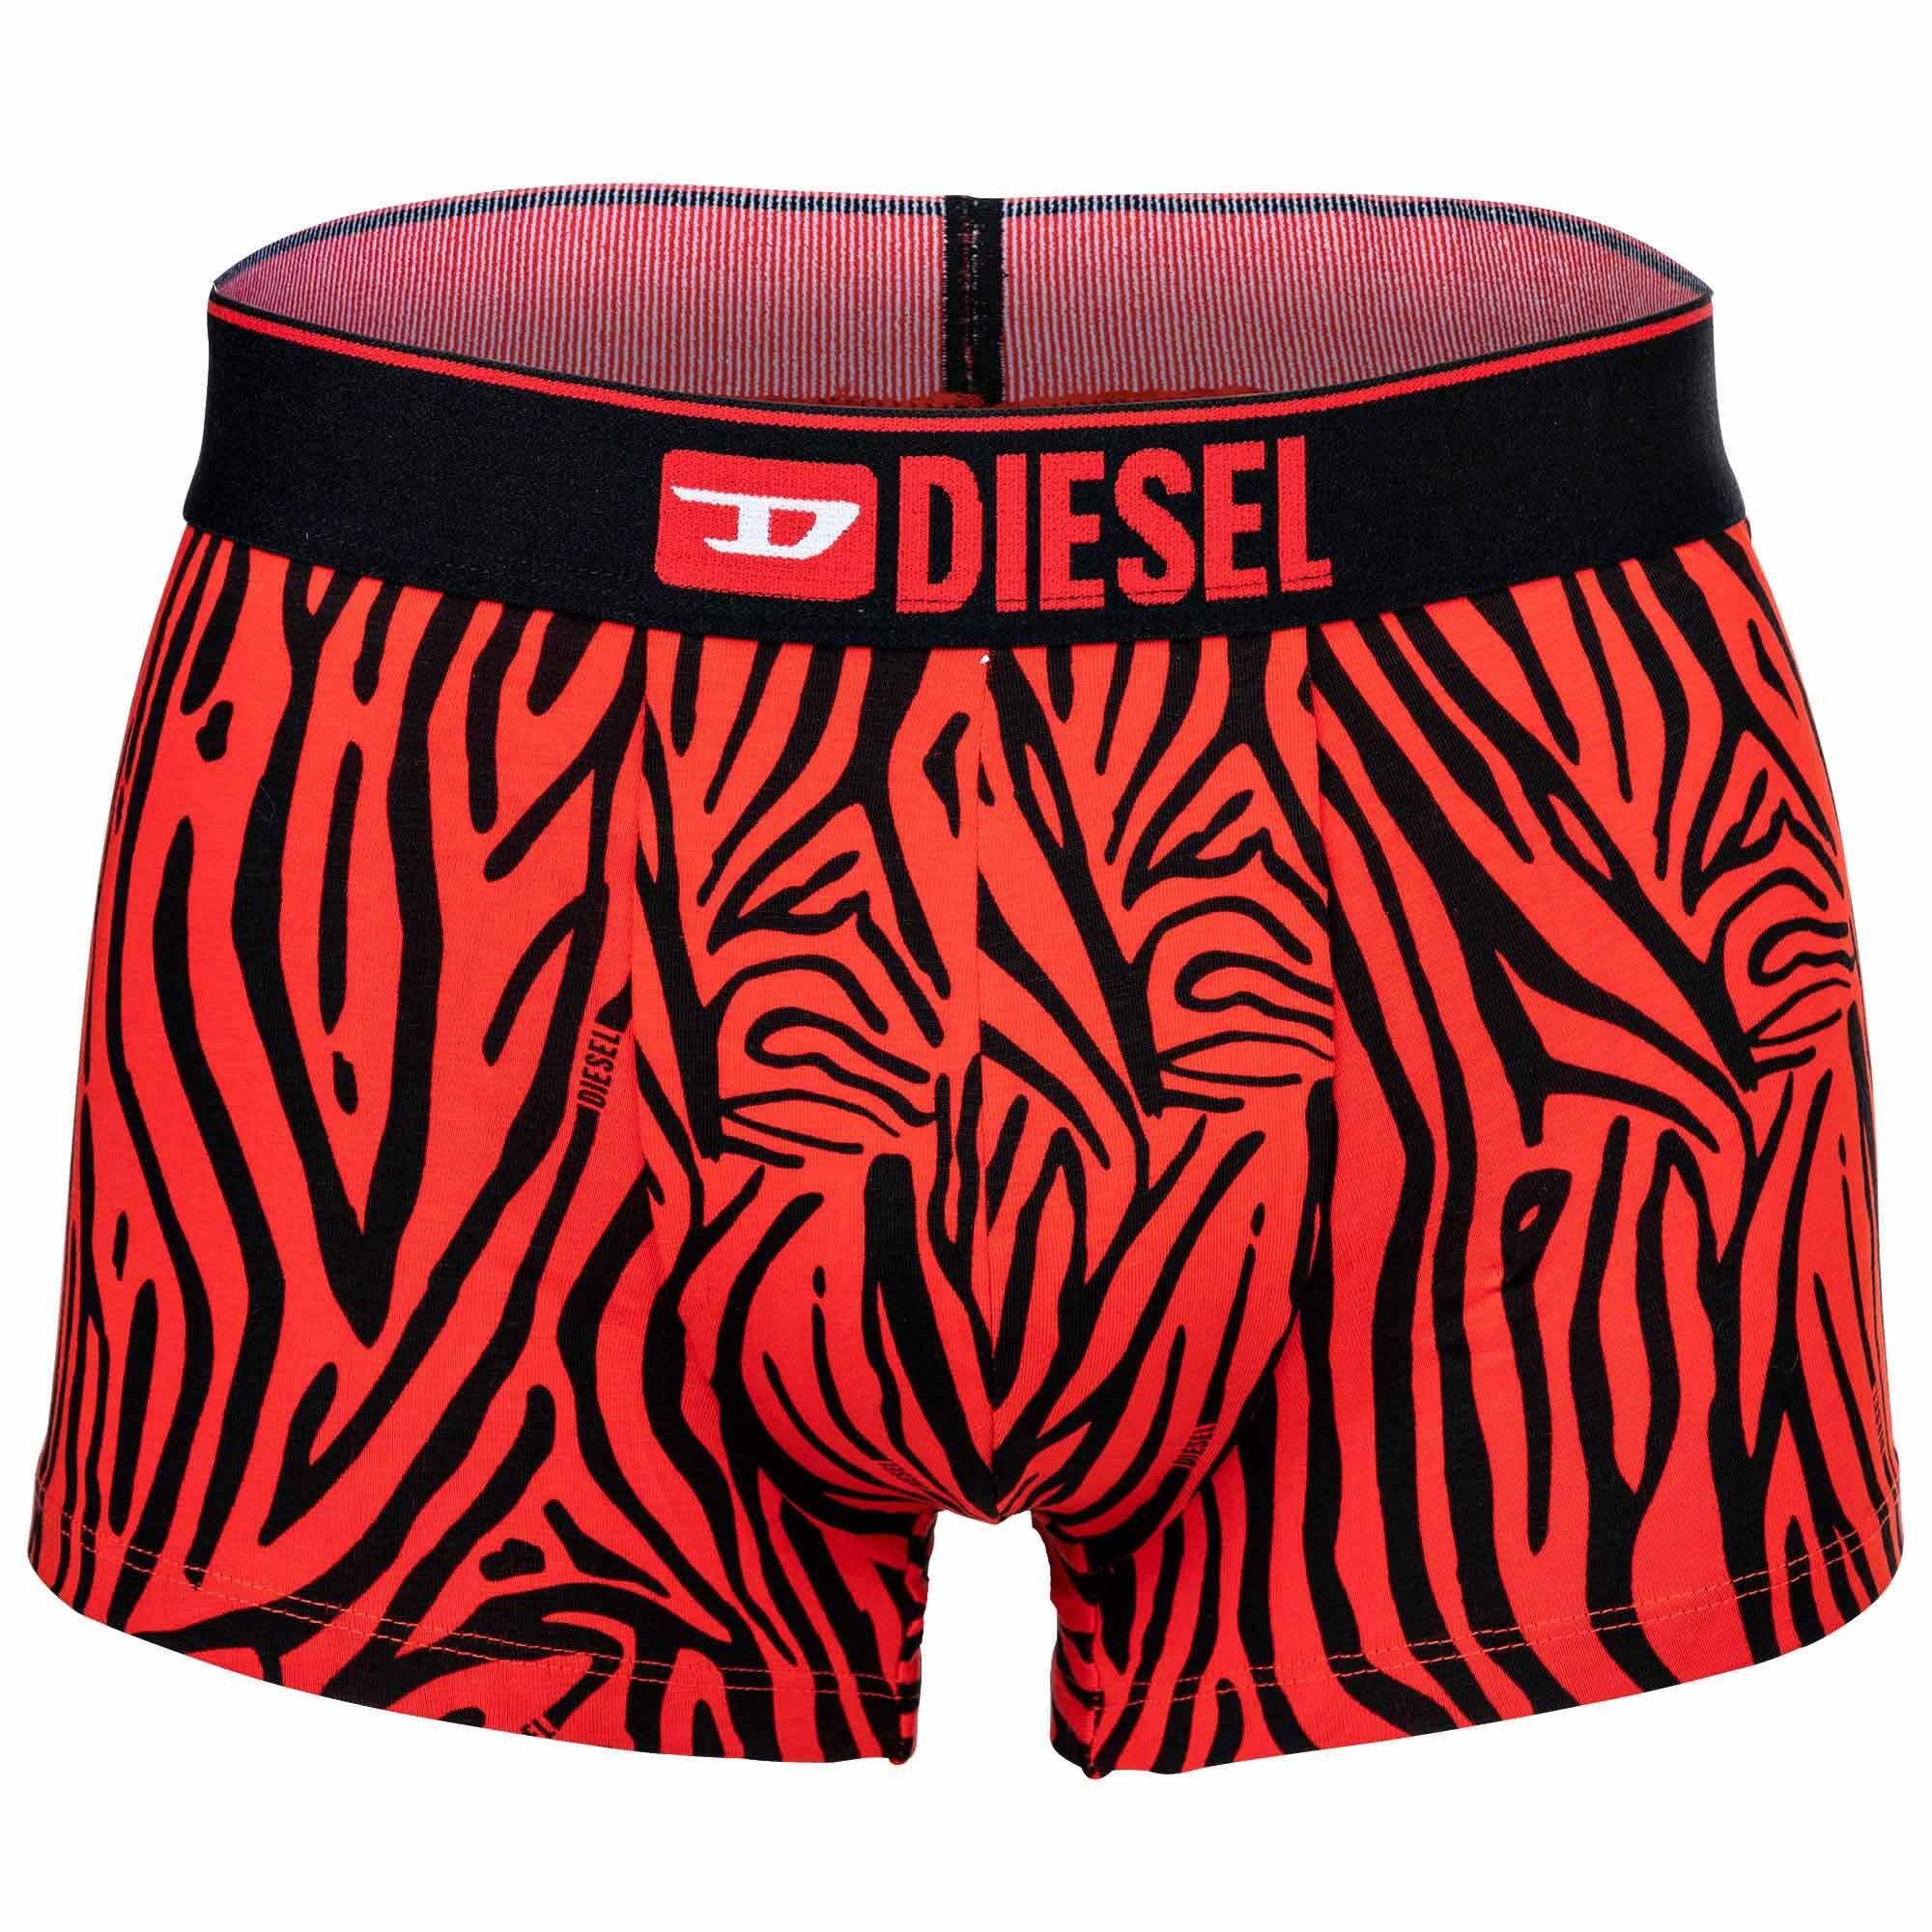 - Diesel Schwarz/Grau/Rot Boxershorts, 3er Pack Boxer Herren